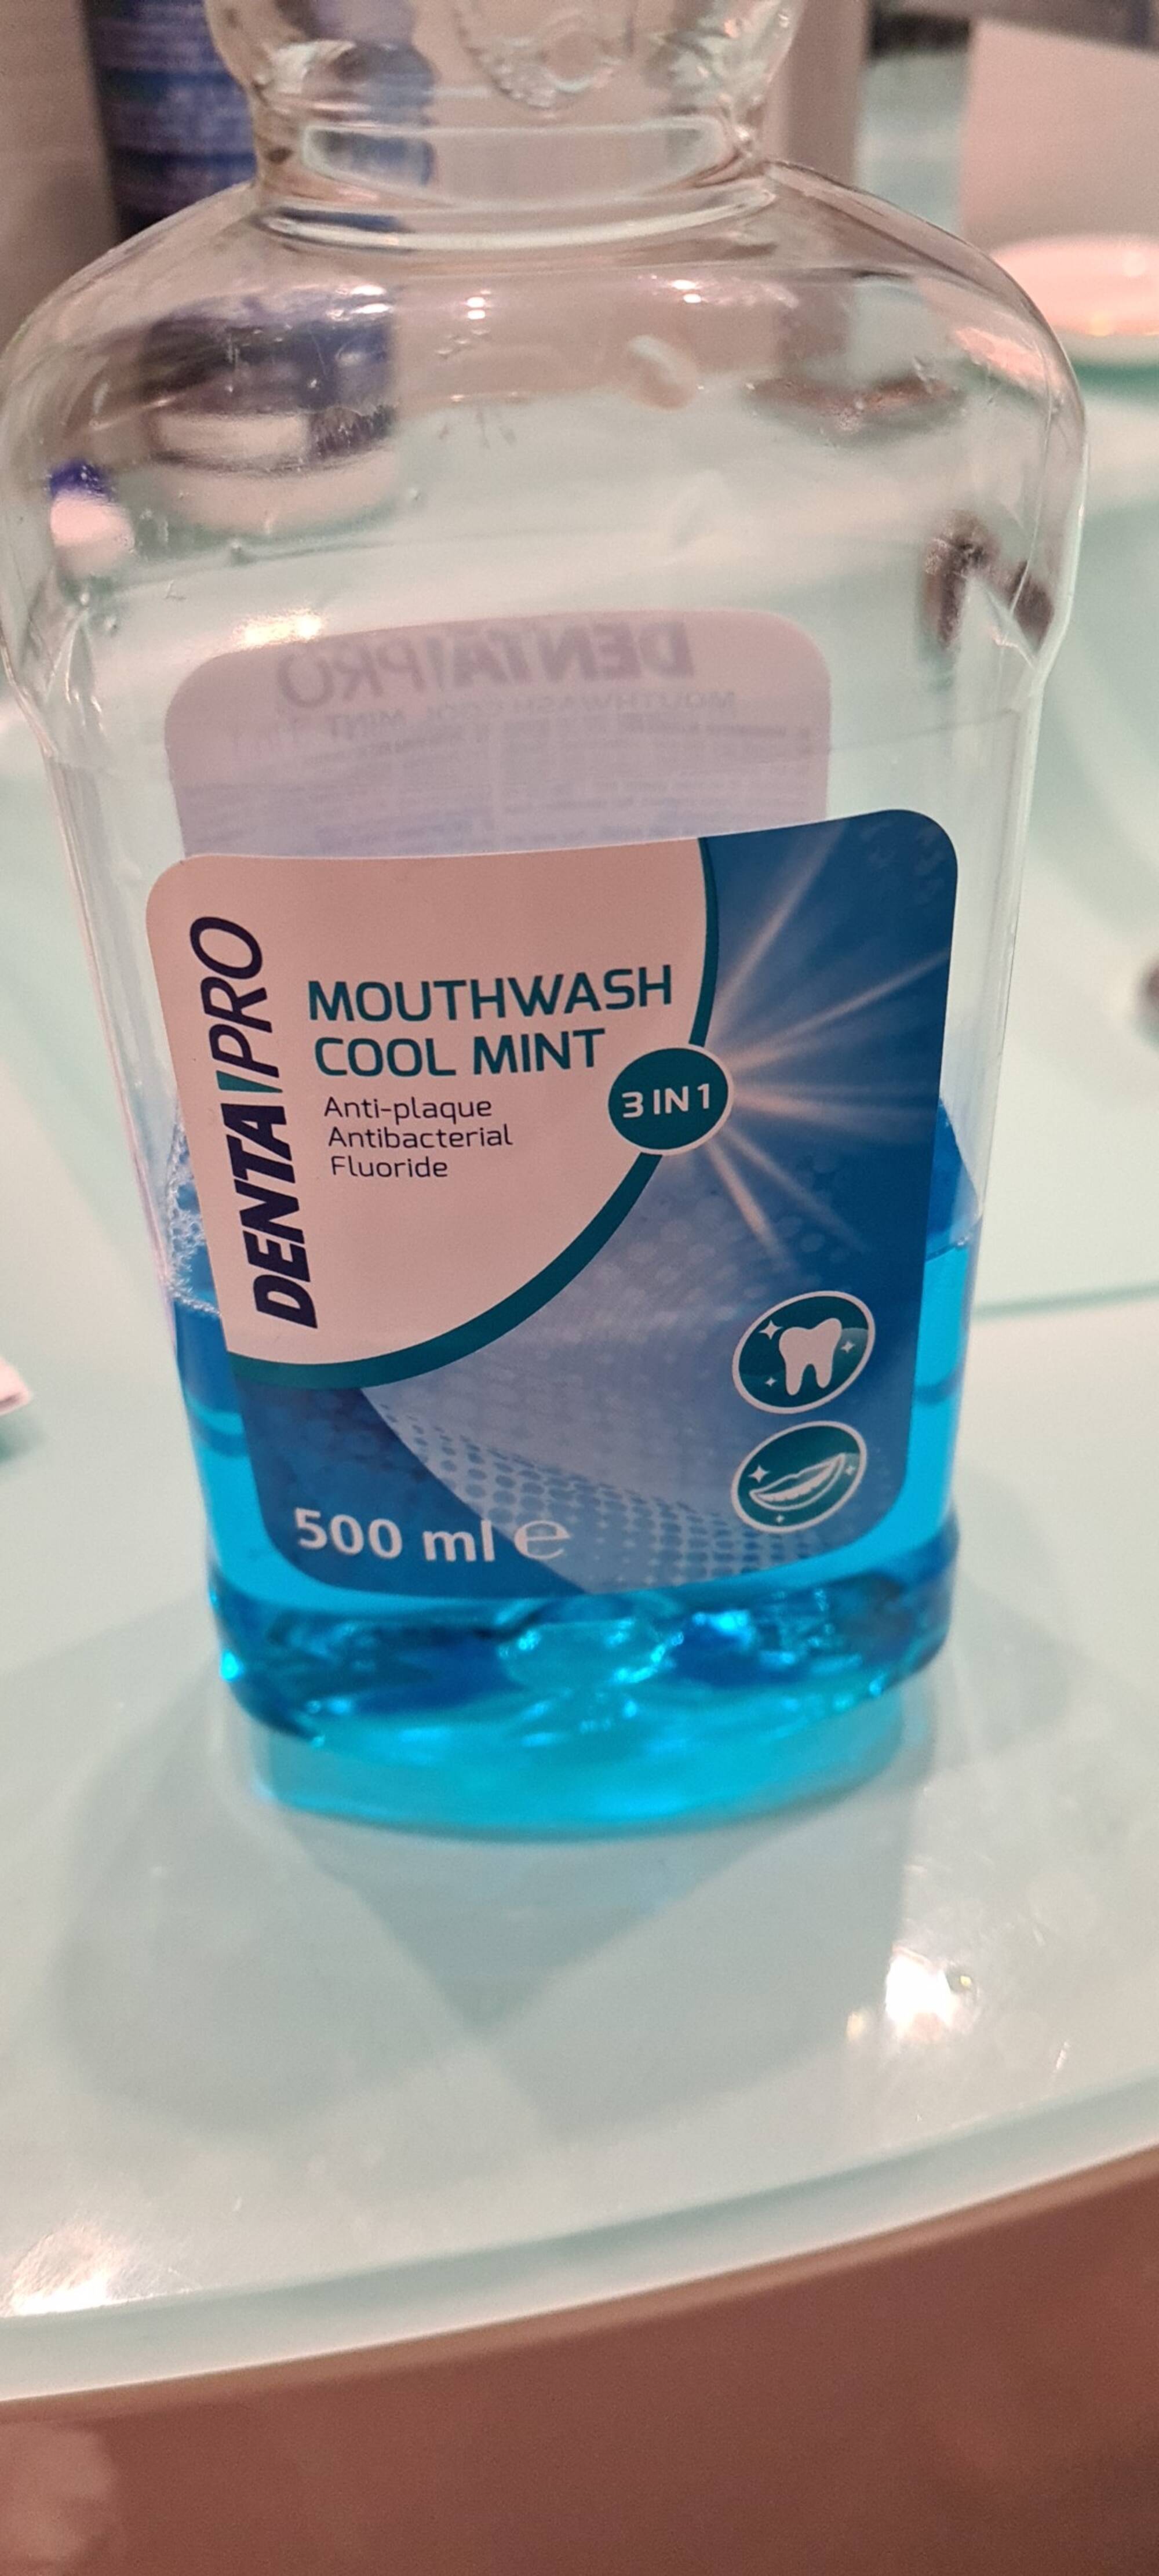 DENTA PRO - Mouthwash cool mint